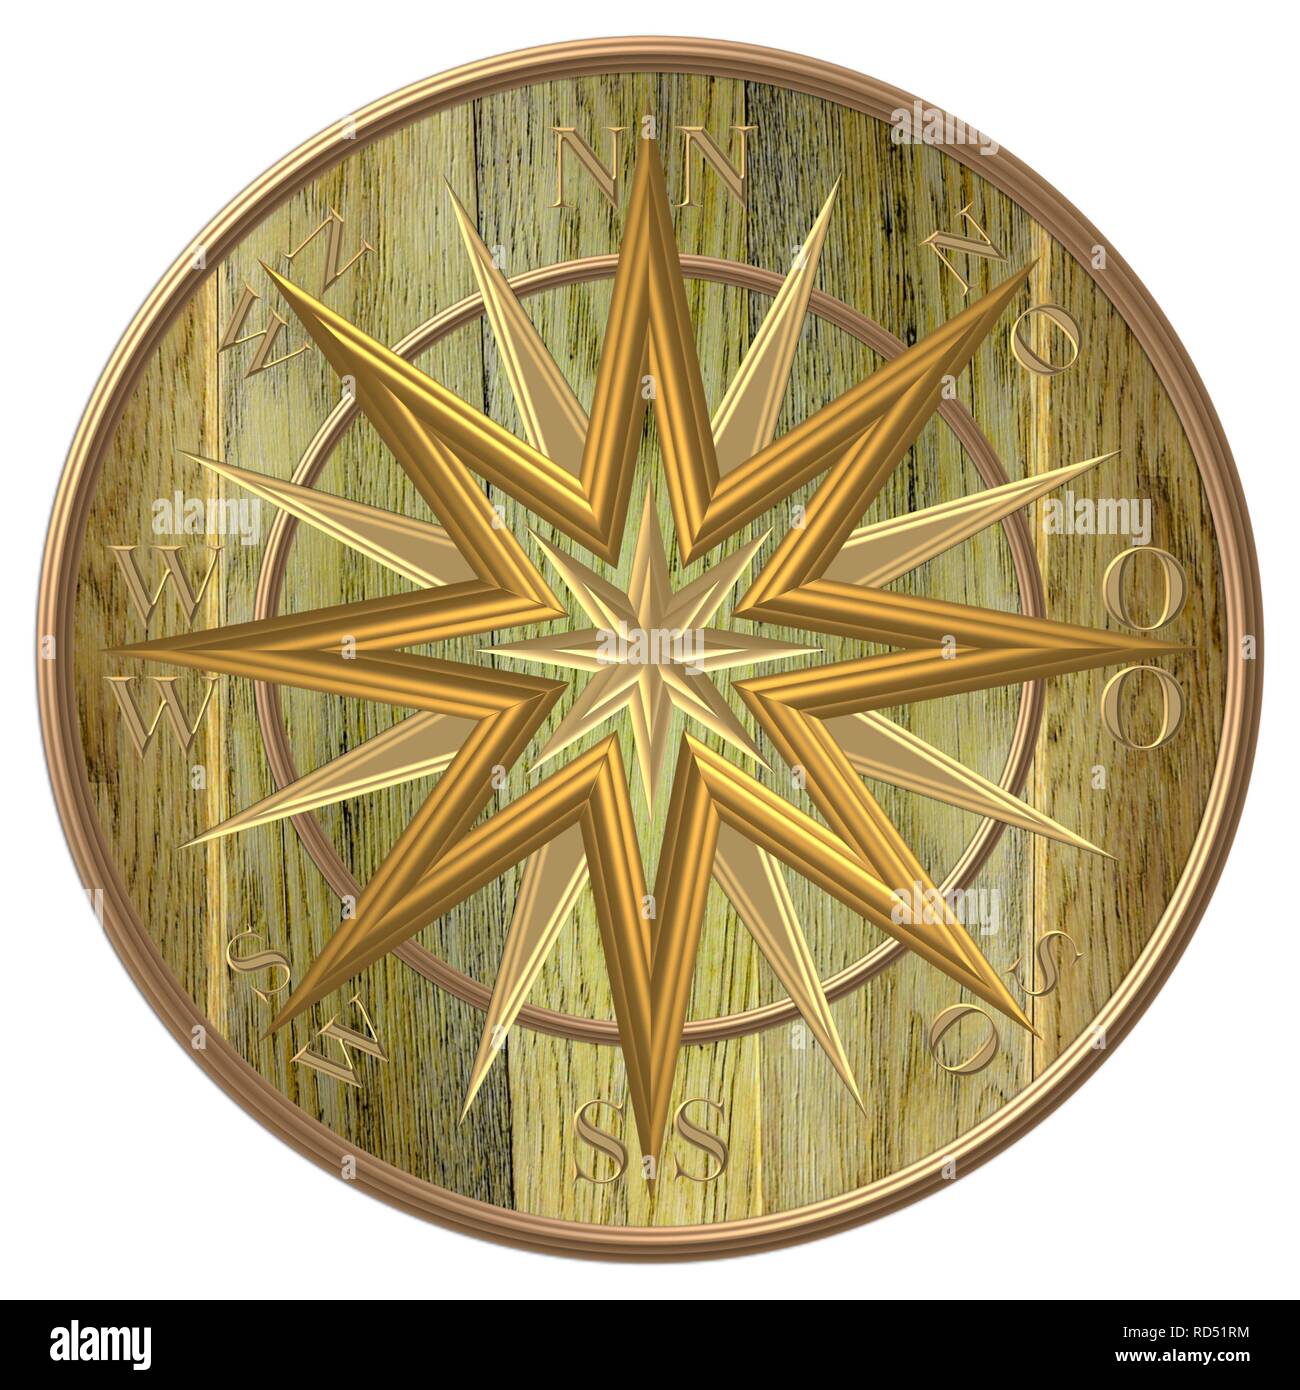 Goldener Kompass - Windrose - Steuerrad Stockfoto